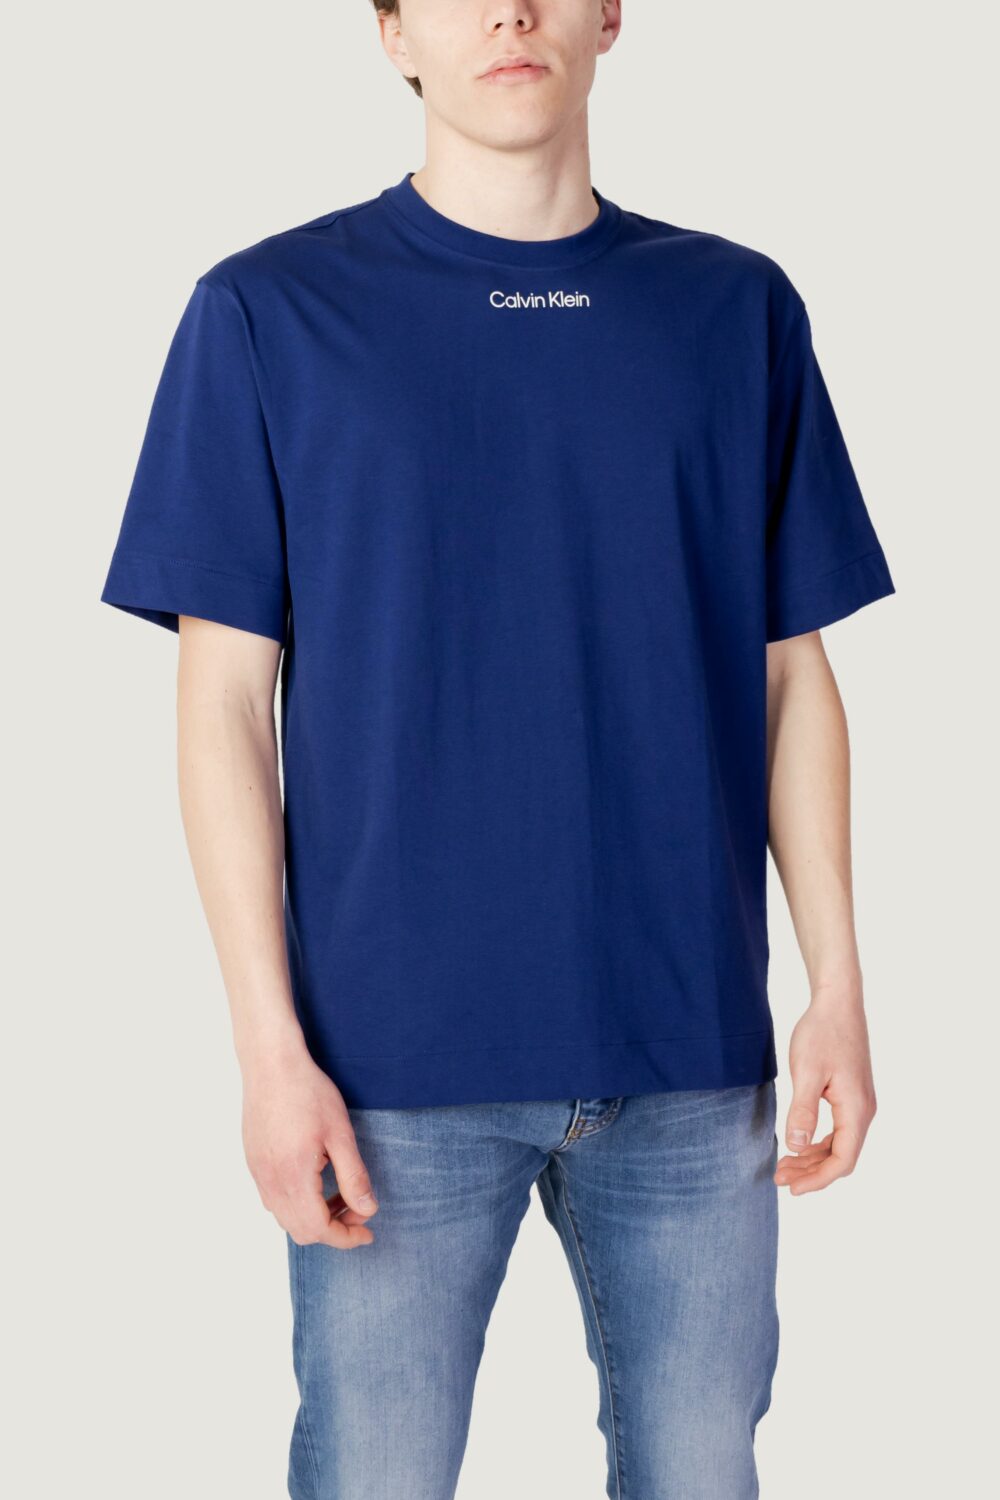 T-shirt Calvin Klein Sport PW - S/S Blu - Foto 4